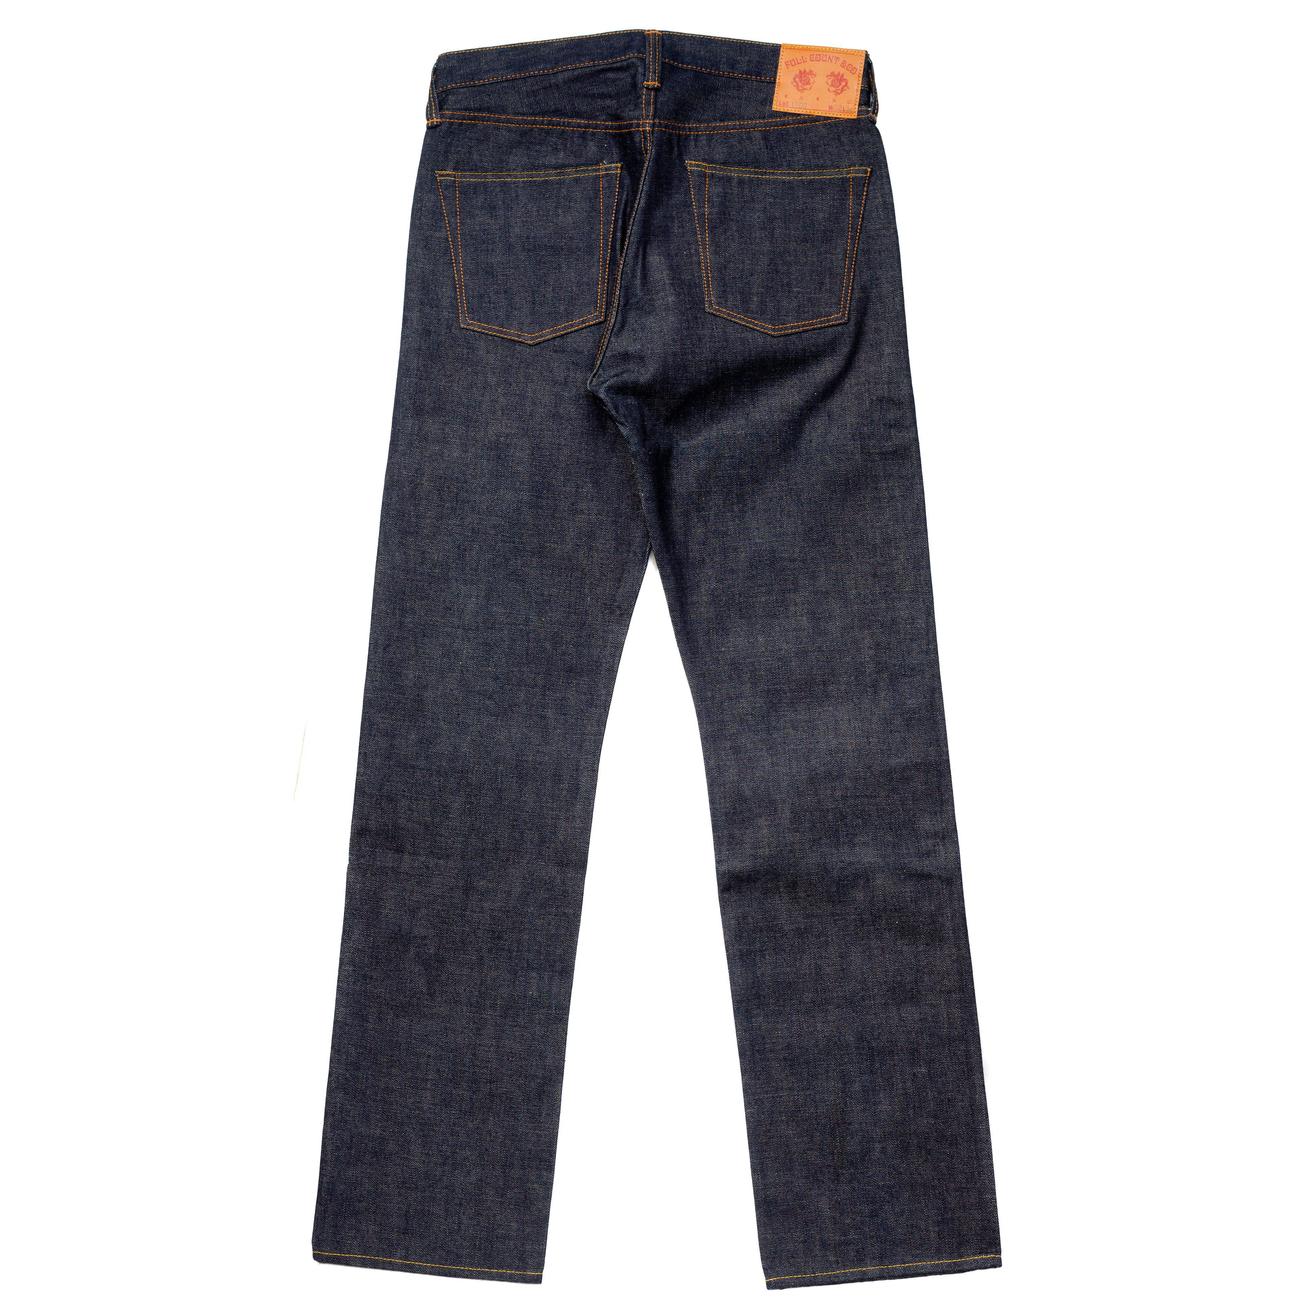 Buy Full Count jeans model 1108XX on Denimhunters